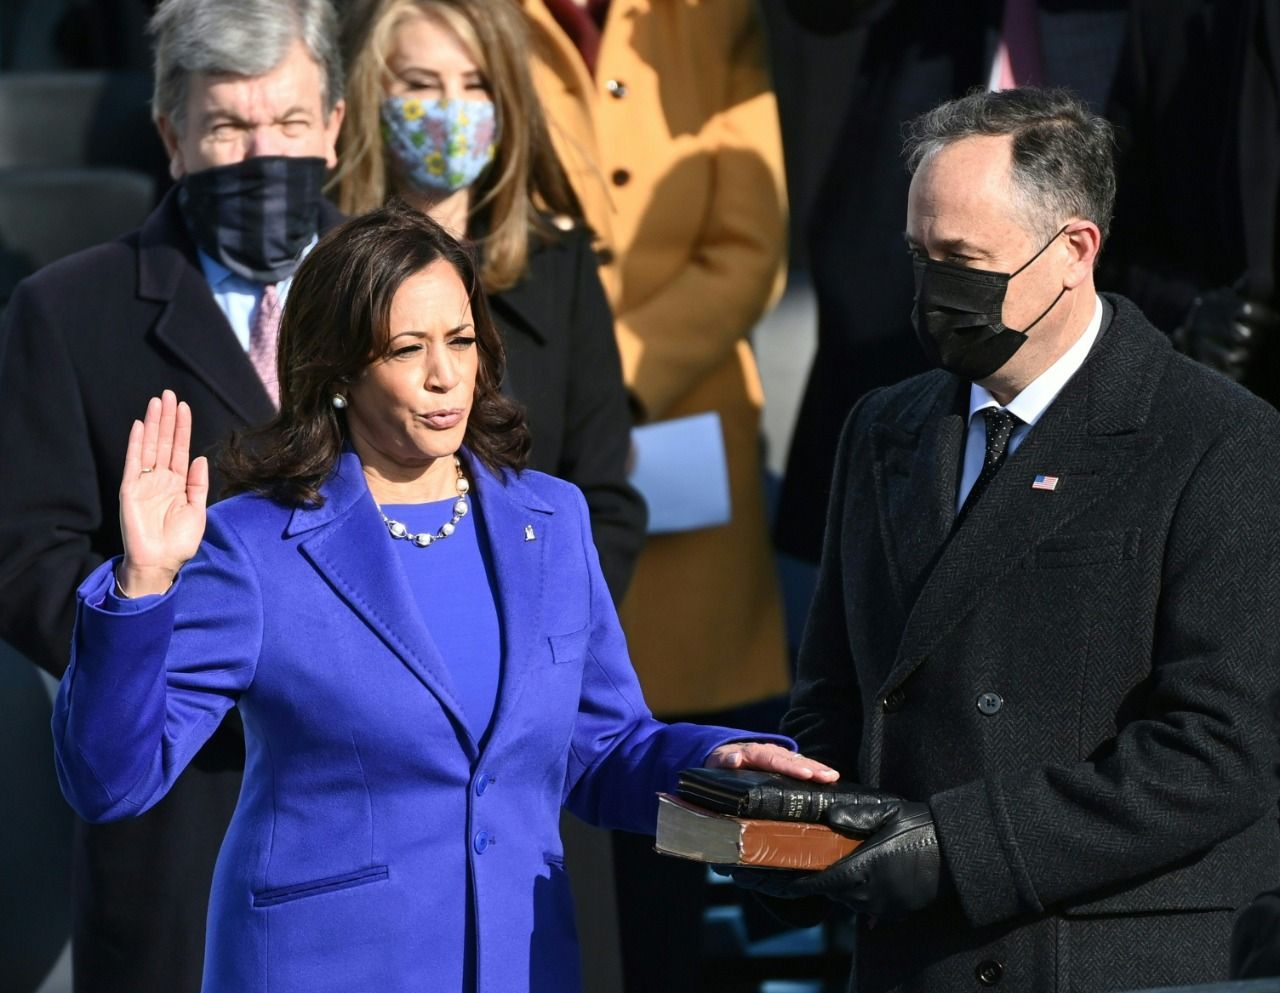 Here’s why women wore purple colour outfits for Joe Biden-Kamala Harris inauguration